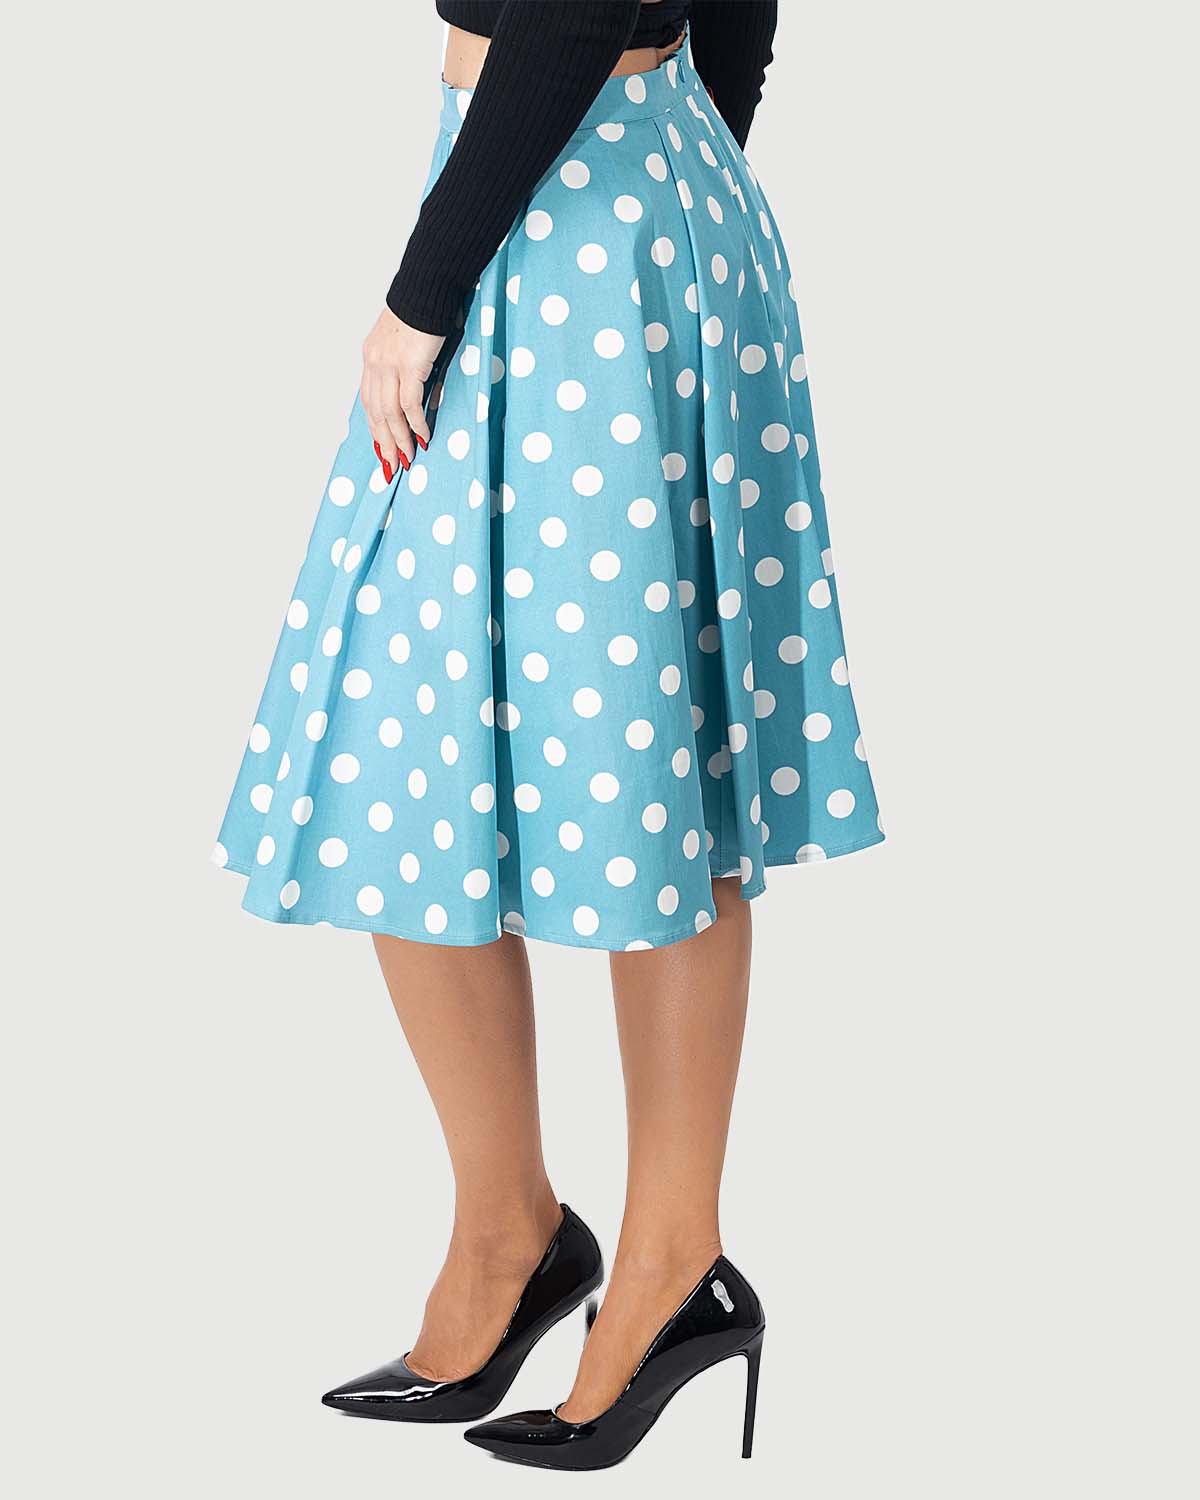 Eva Rose Clothing - Fit & Flare Baby Blue Polka Dot Print Skirt W/ Pocket: L